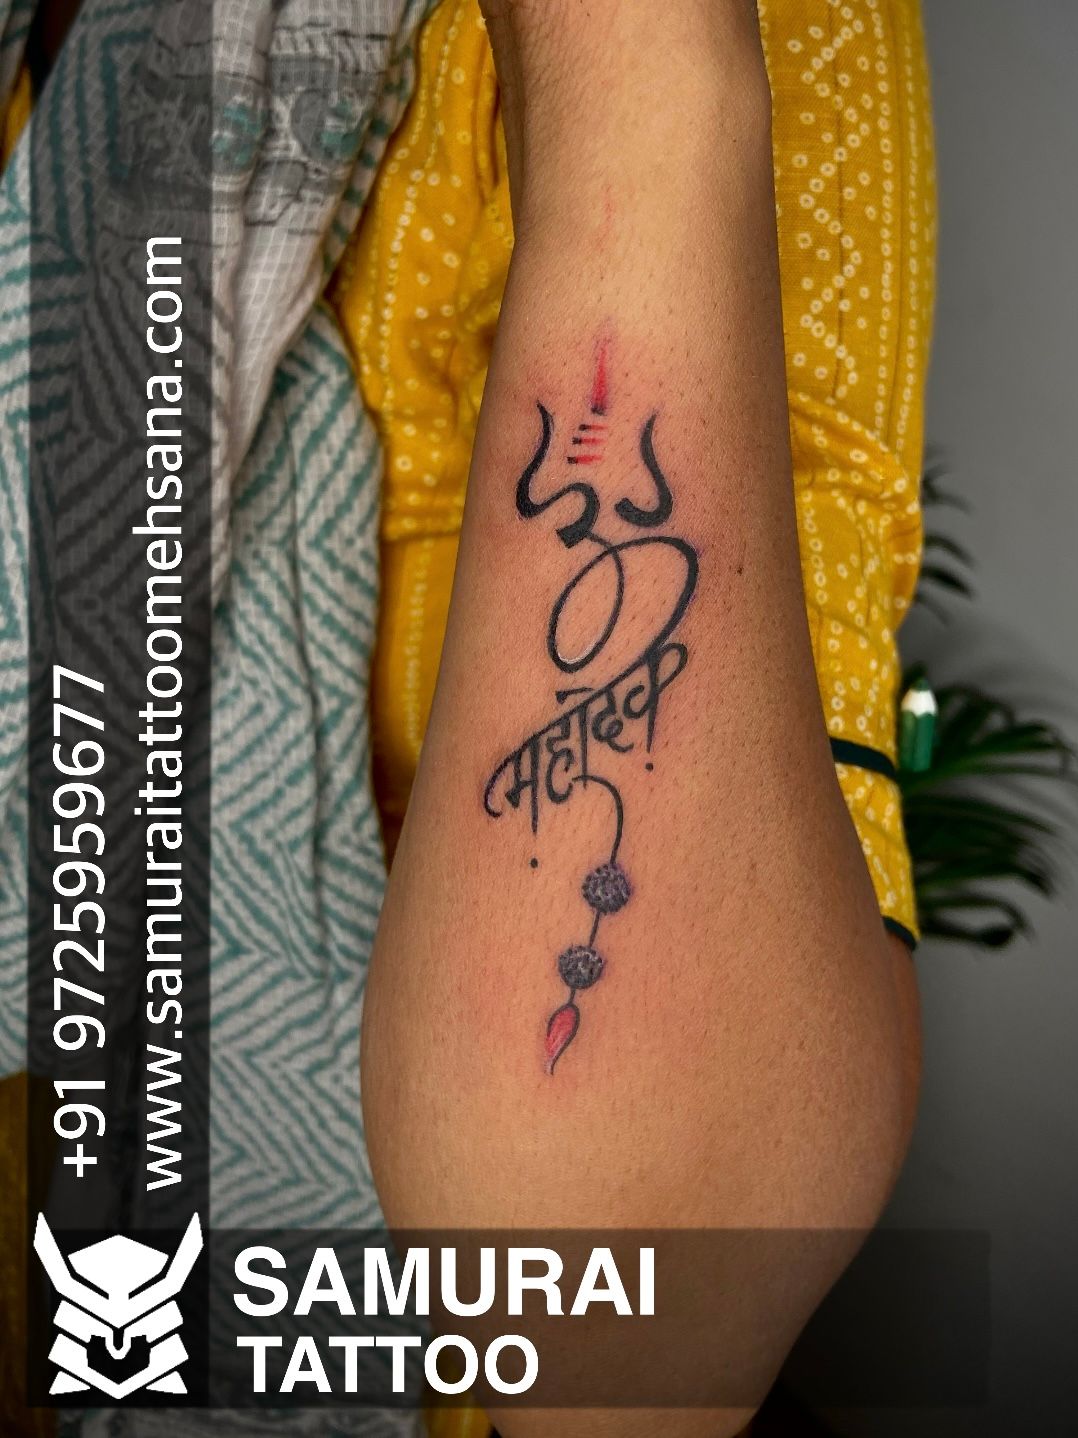 Tattoo uploaded by Vipul Chaudhary • Nishal name tattoo |Nishal tattoo  |Nishal name tattoo design • Tattoodo